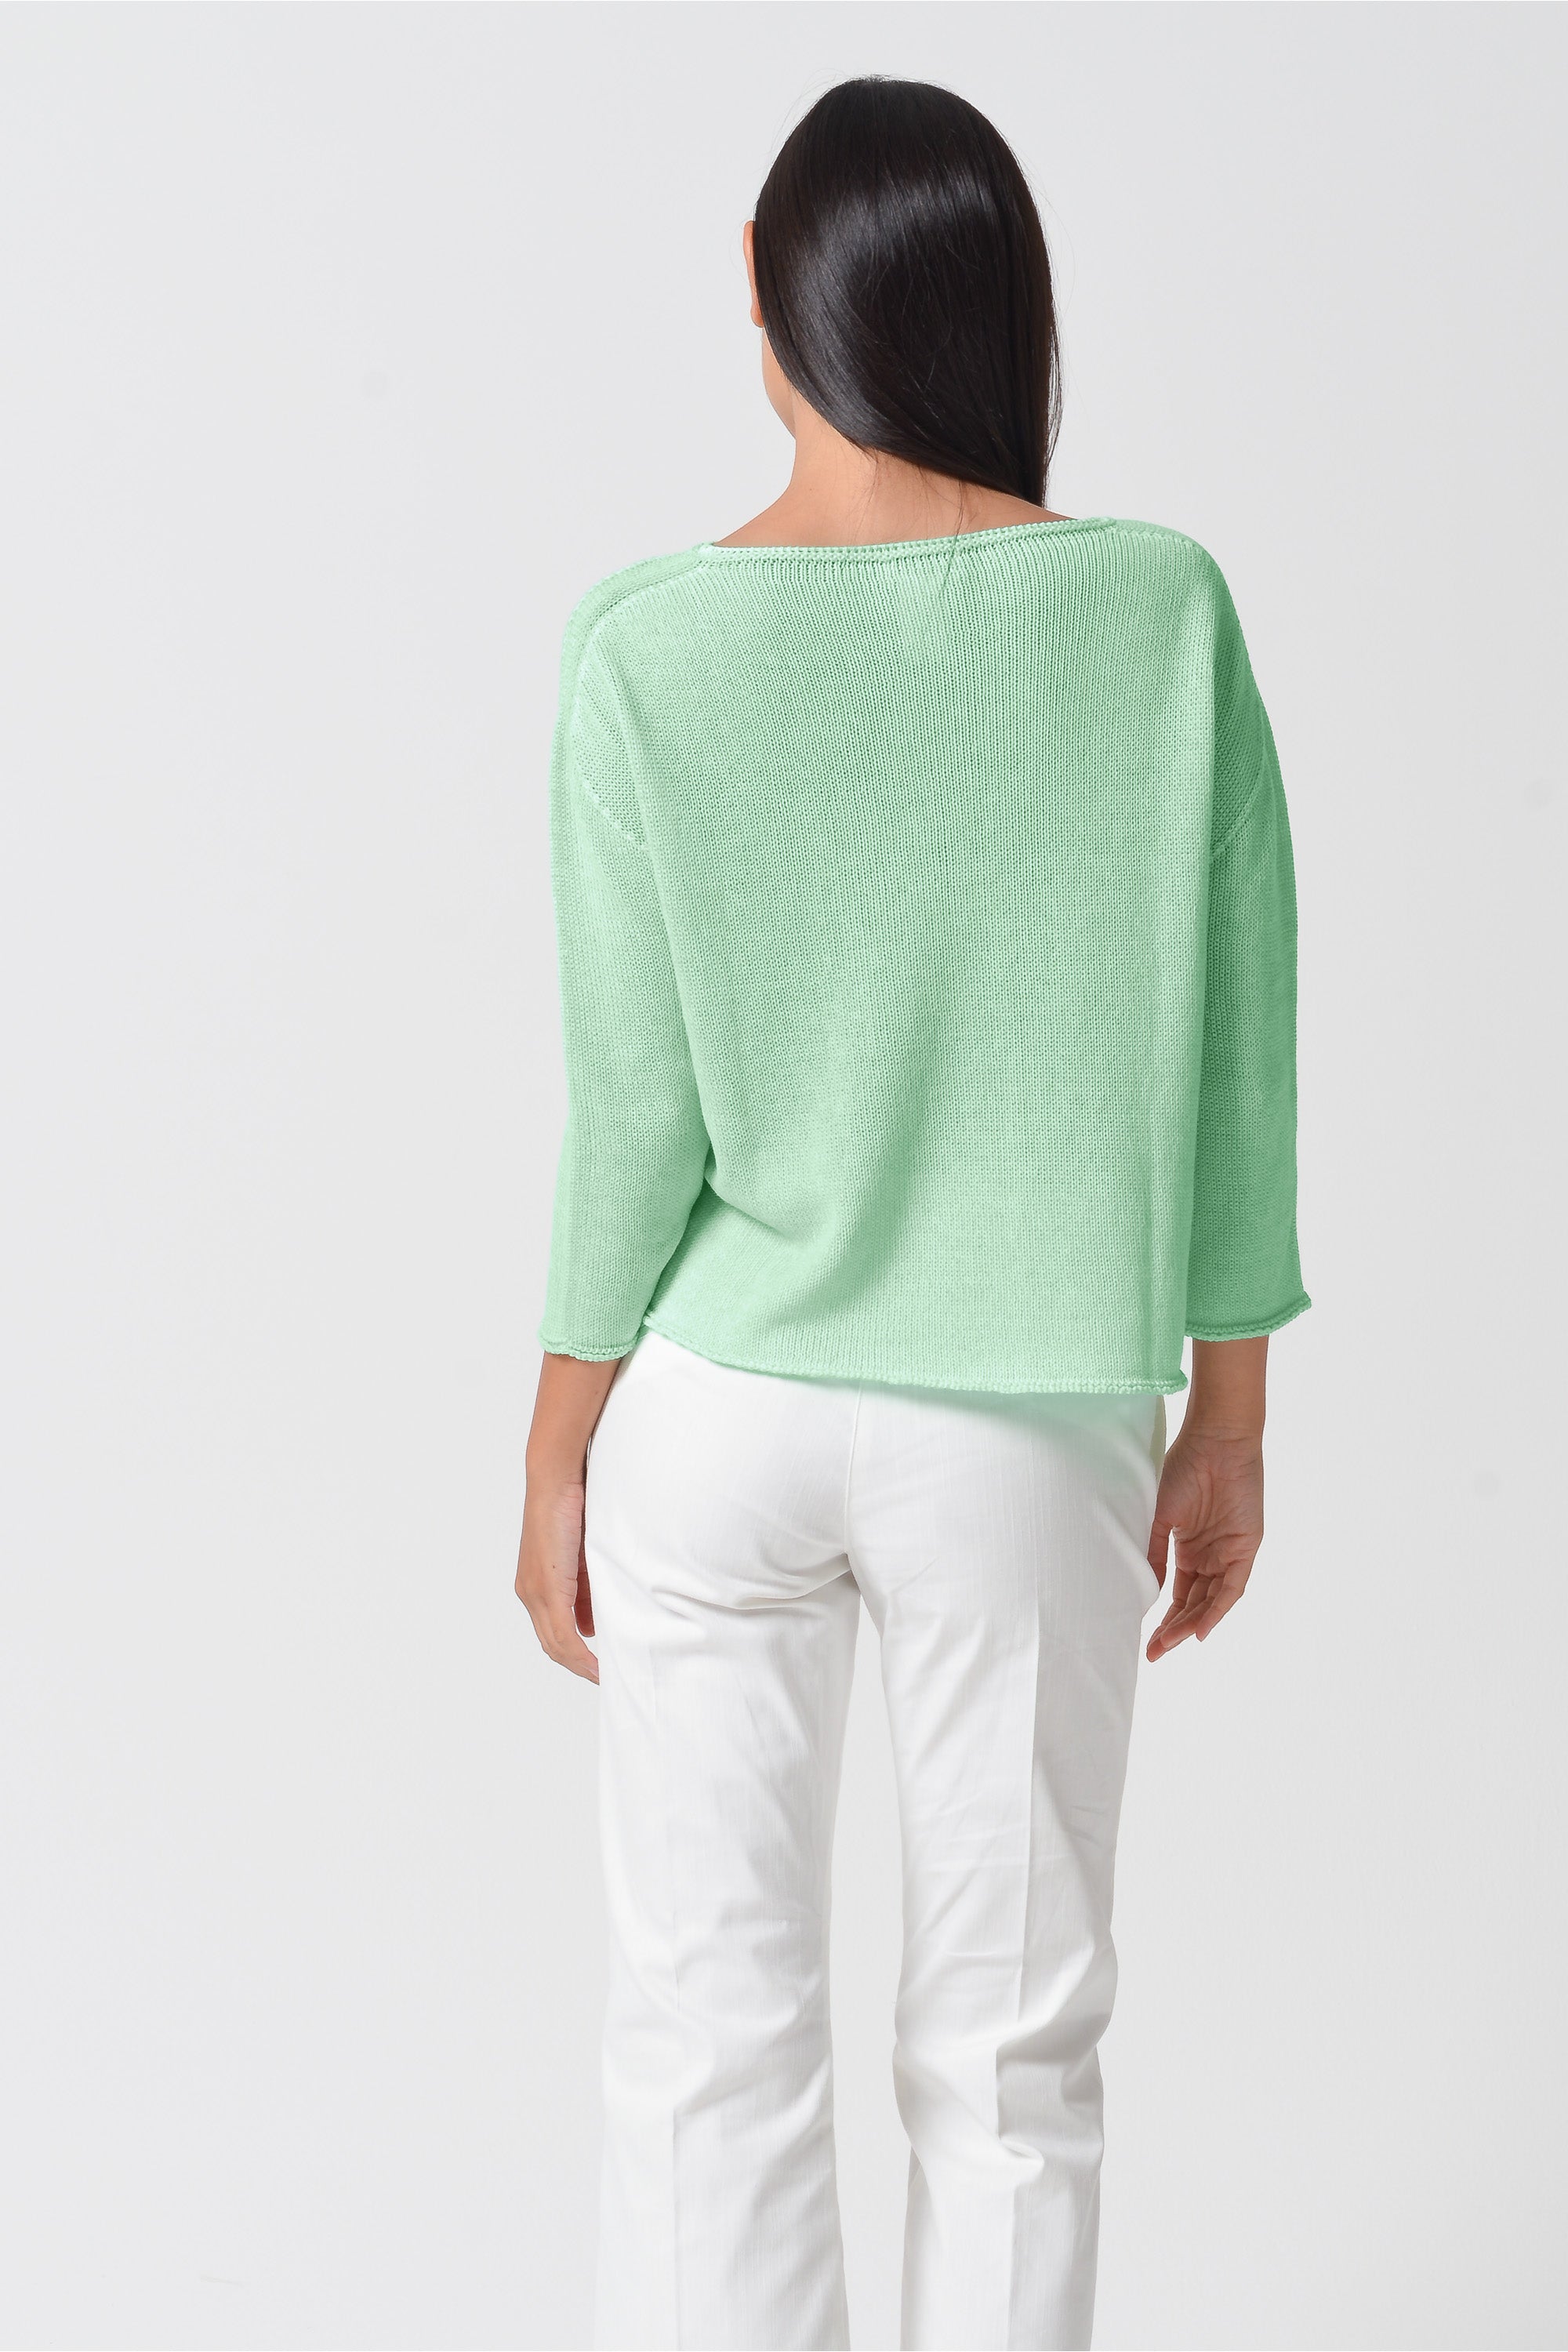 Sofia Knit - Short Sleeve Cotton Sweater - Mint